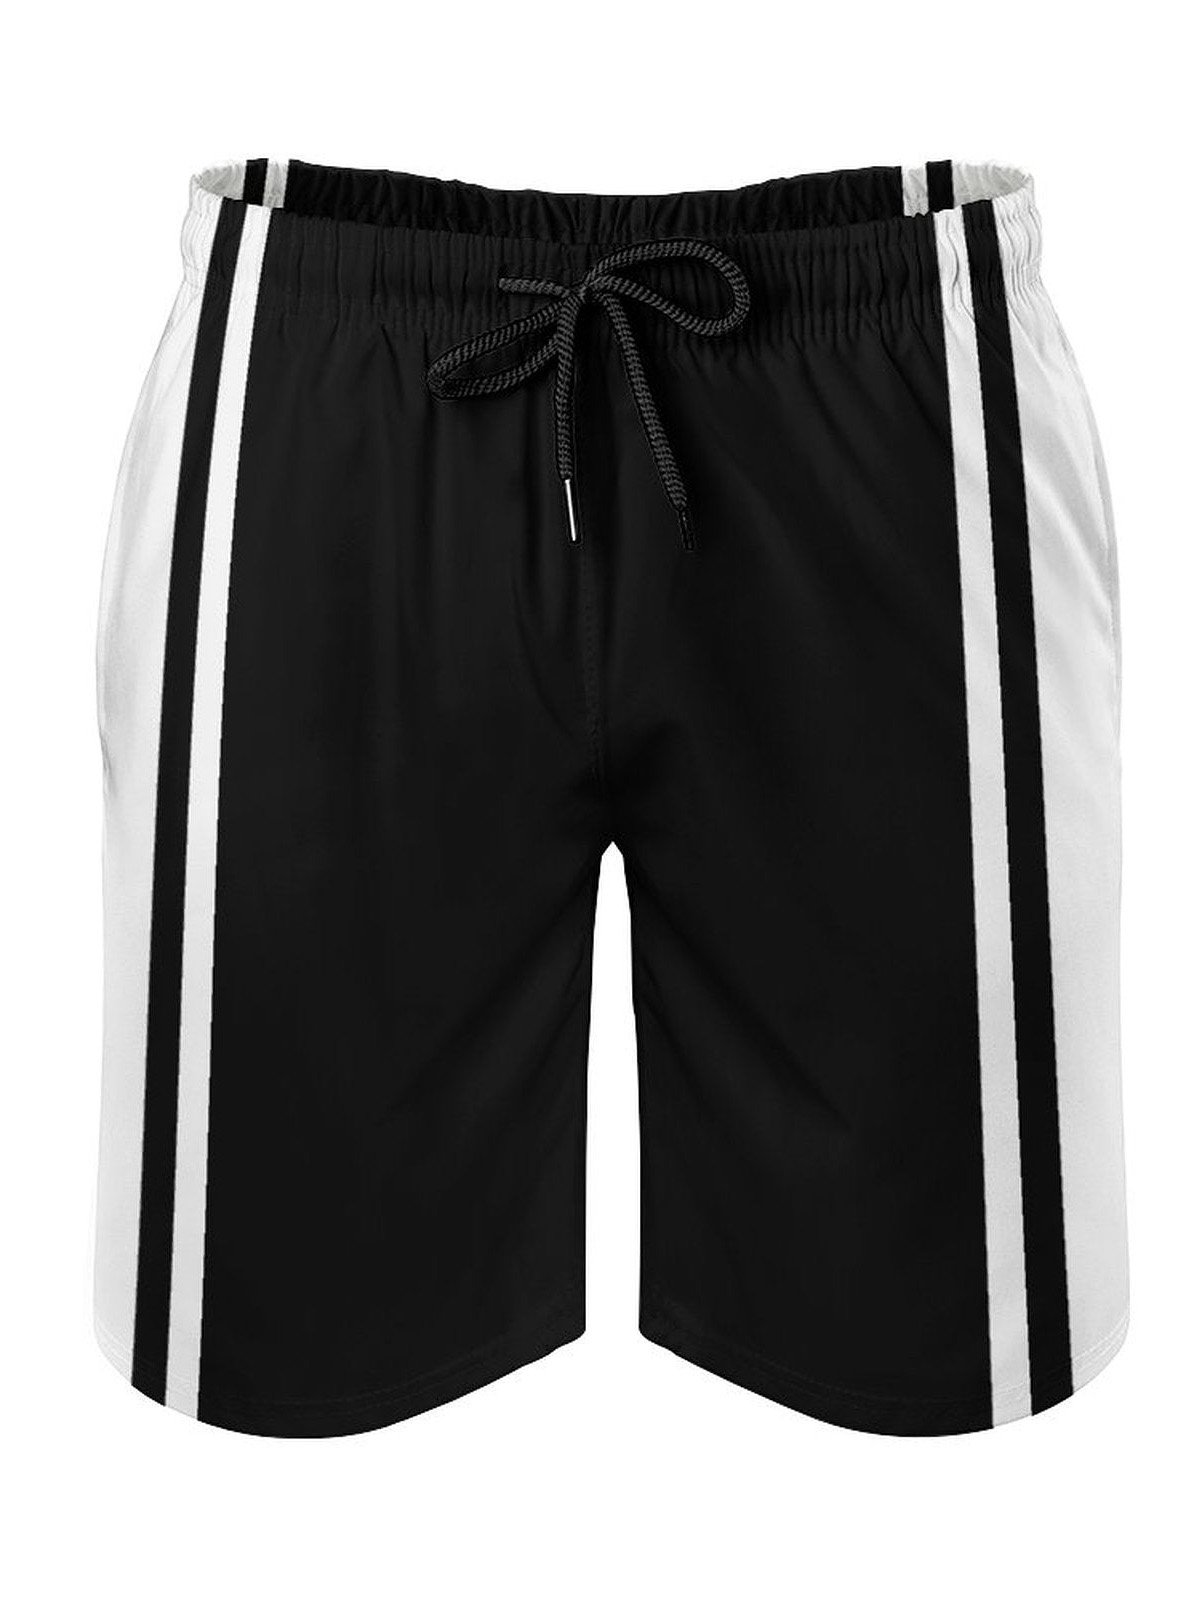 Royaura® Basic Striped Board Shorts Stretch Quick-Dry Casual Boat Pants Big Tall